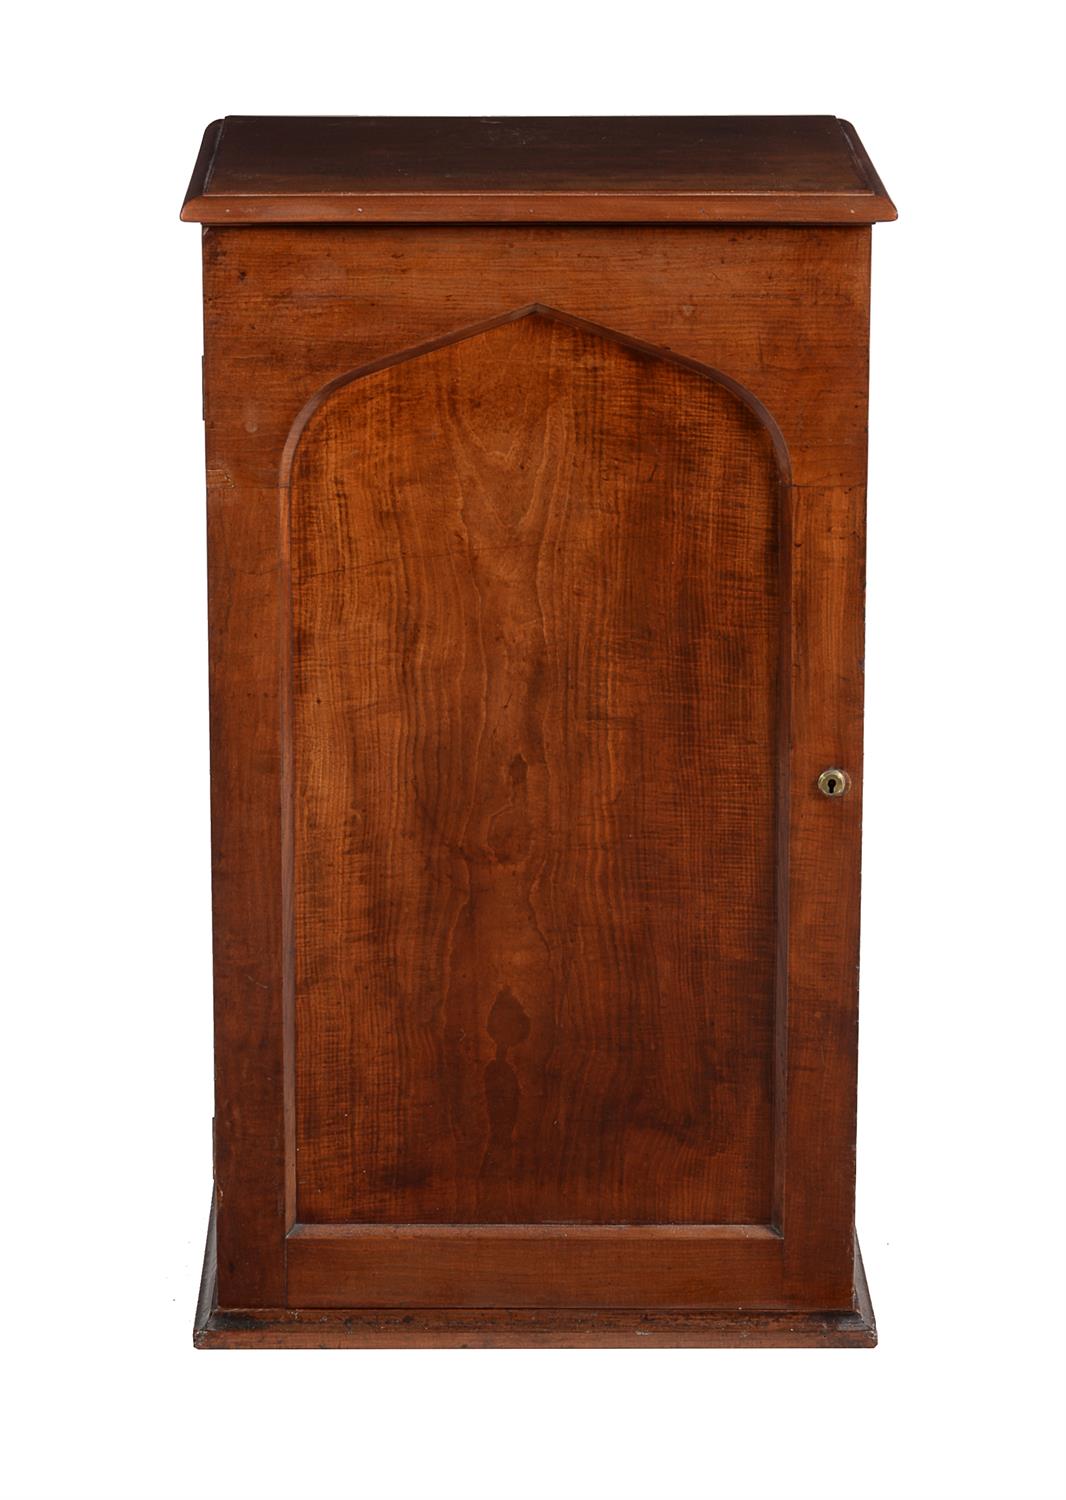 A mahogany collector's cabinet